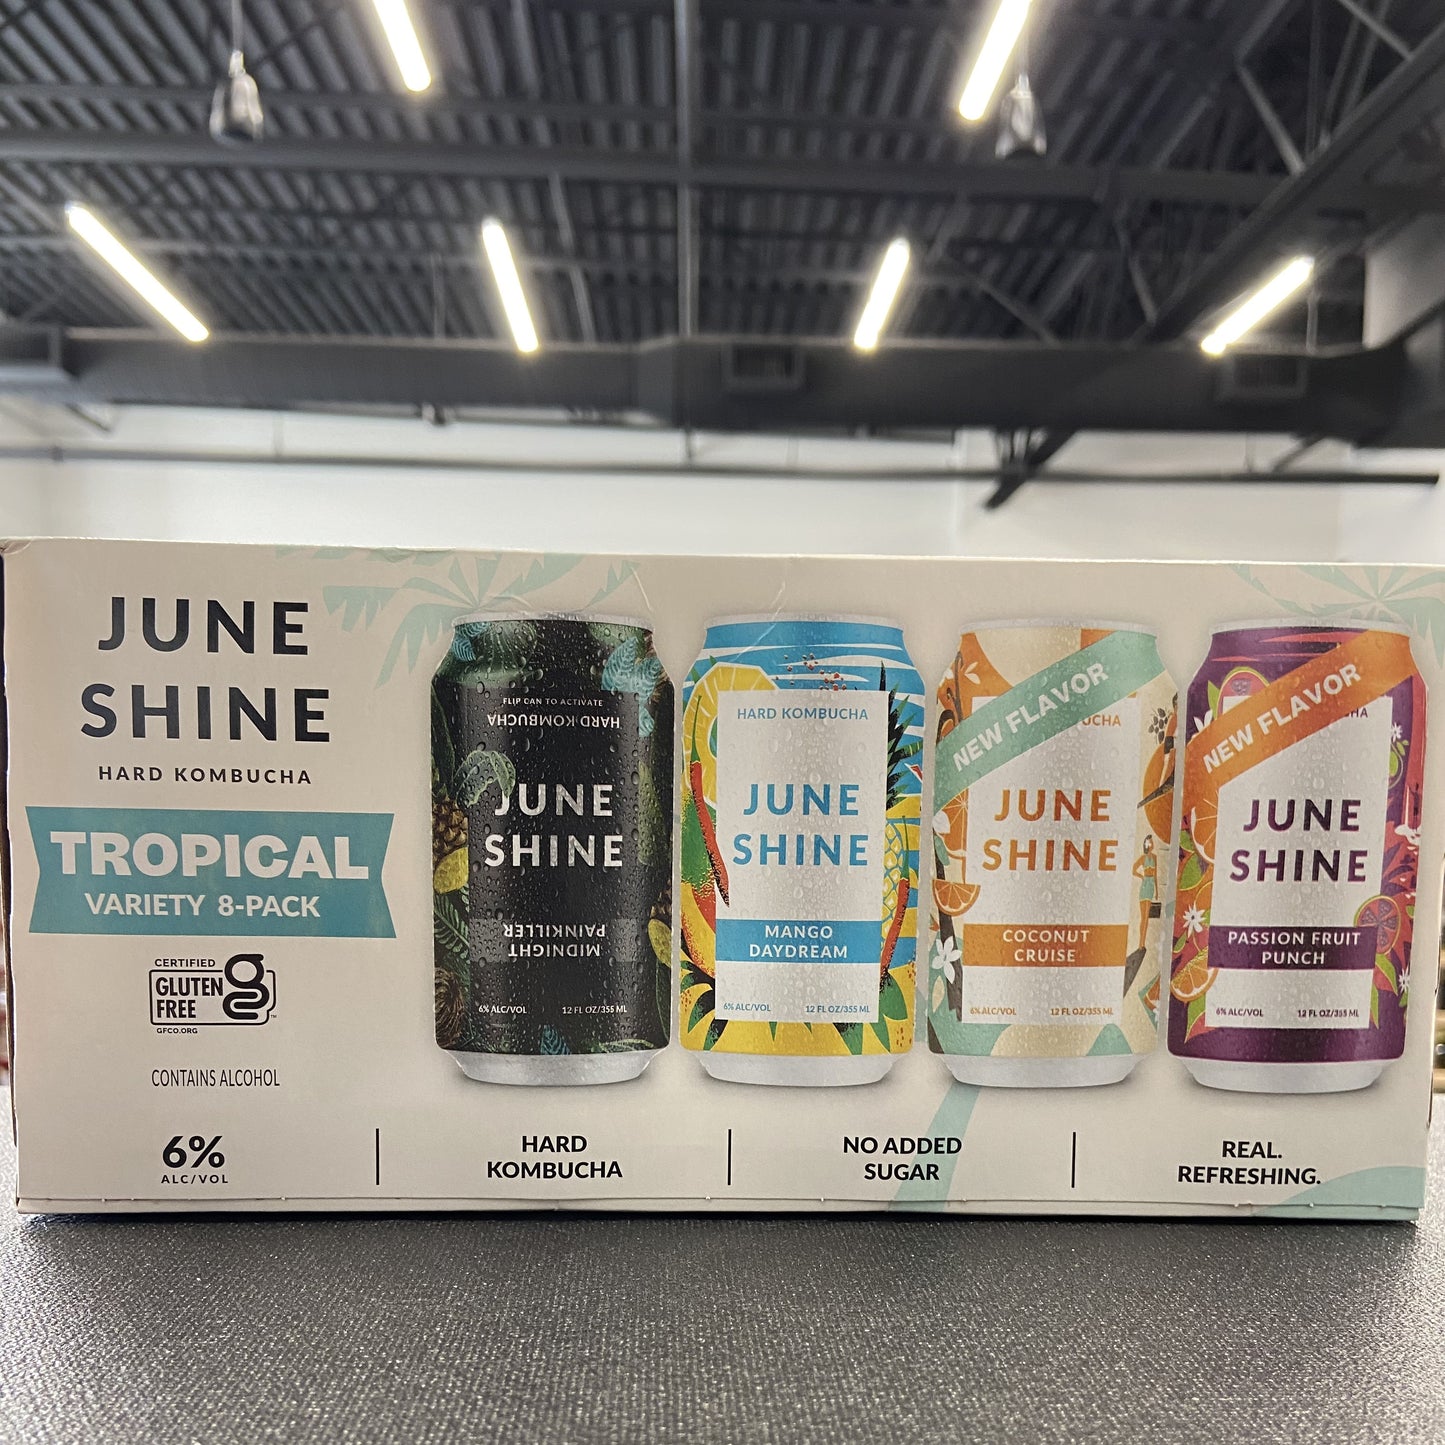 June Shine Tropical Variety